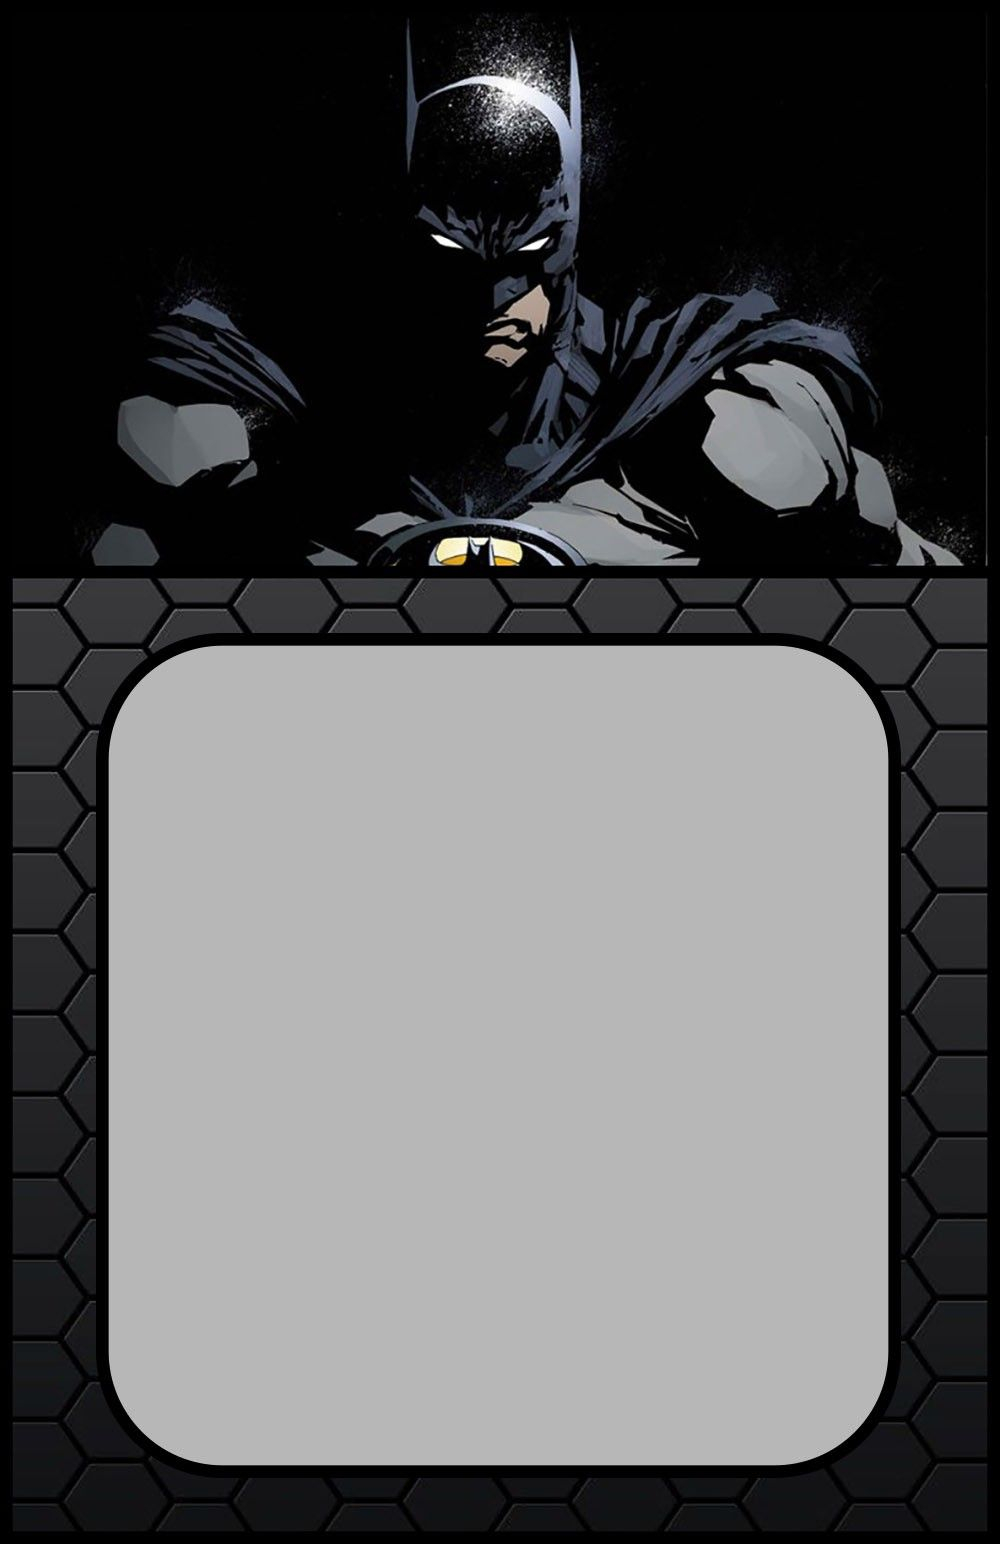 Printable Batman Invitation Card Coolest Invitation Templates within size 1000 X 1544